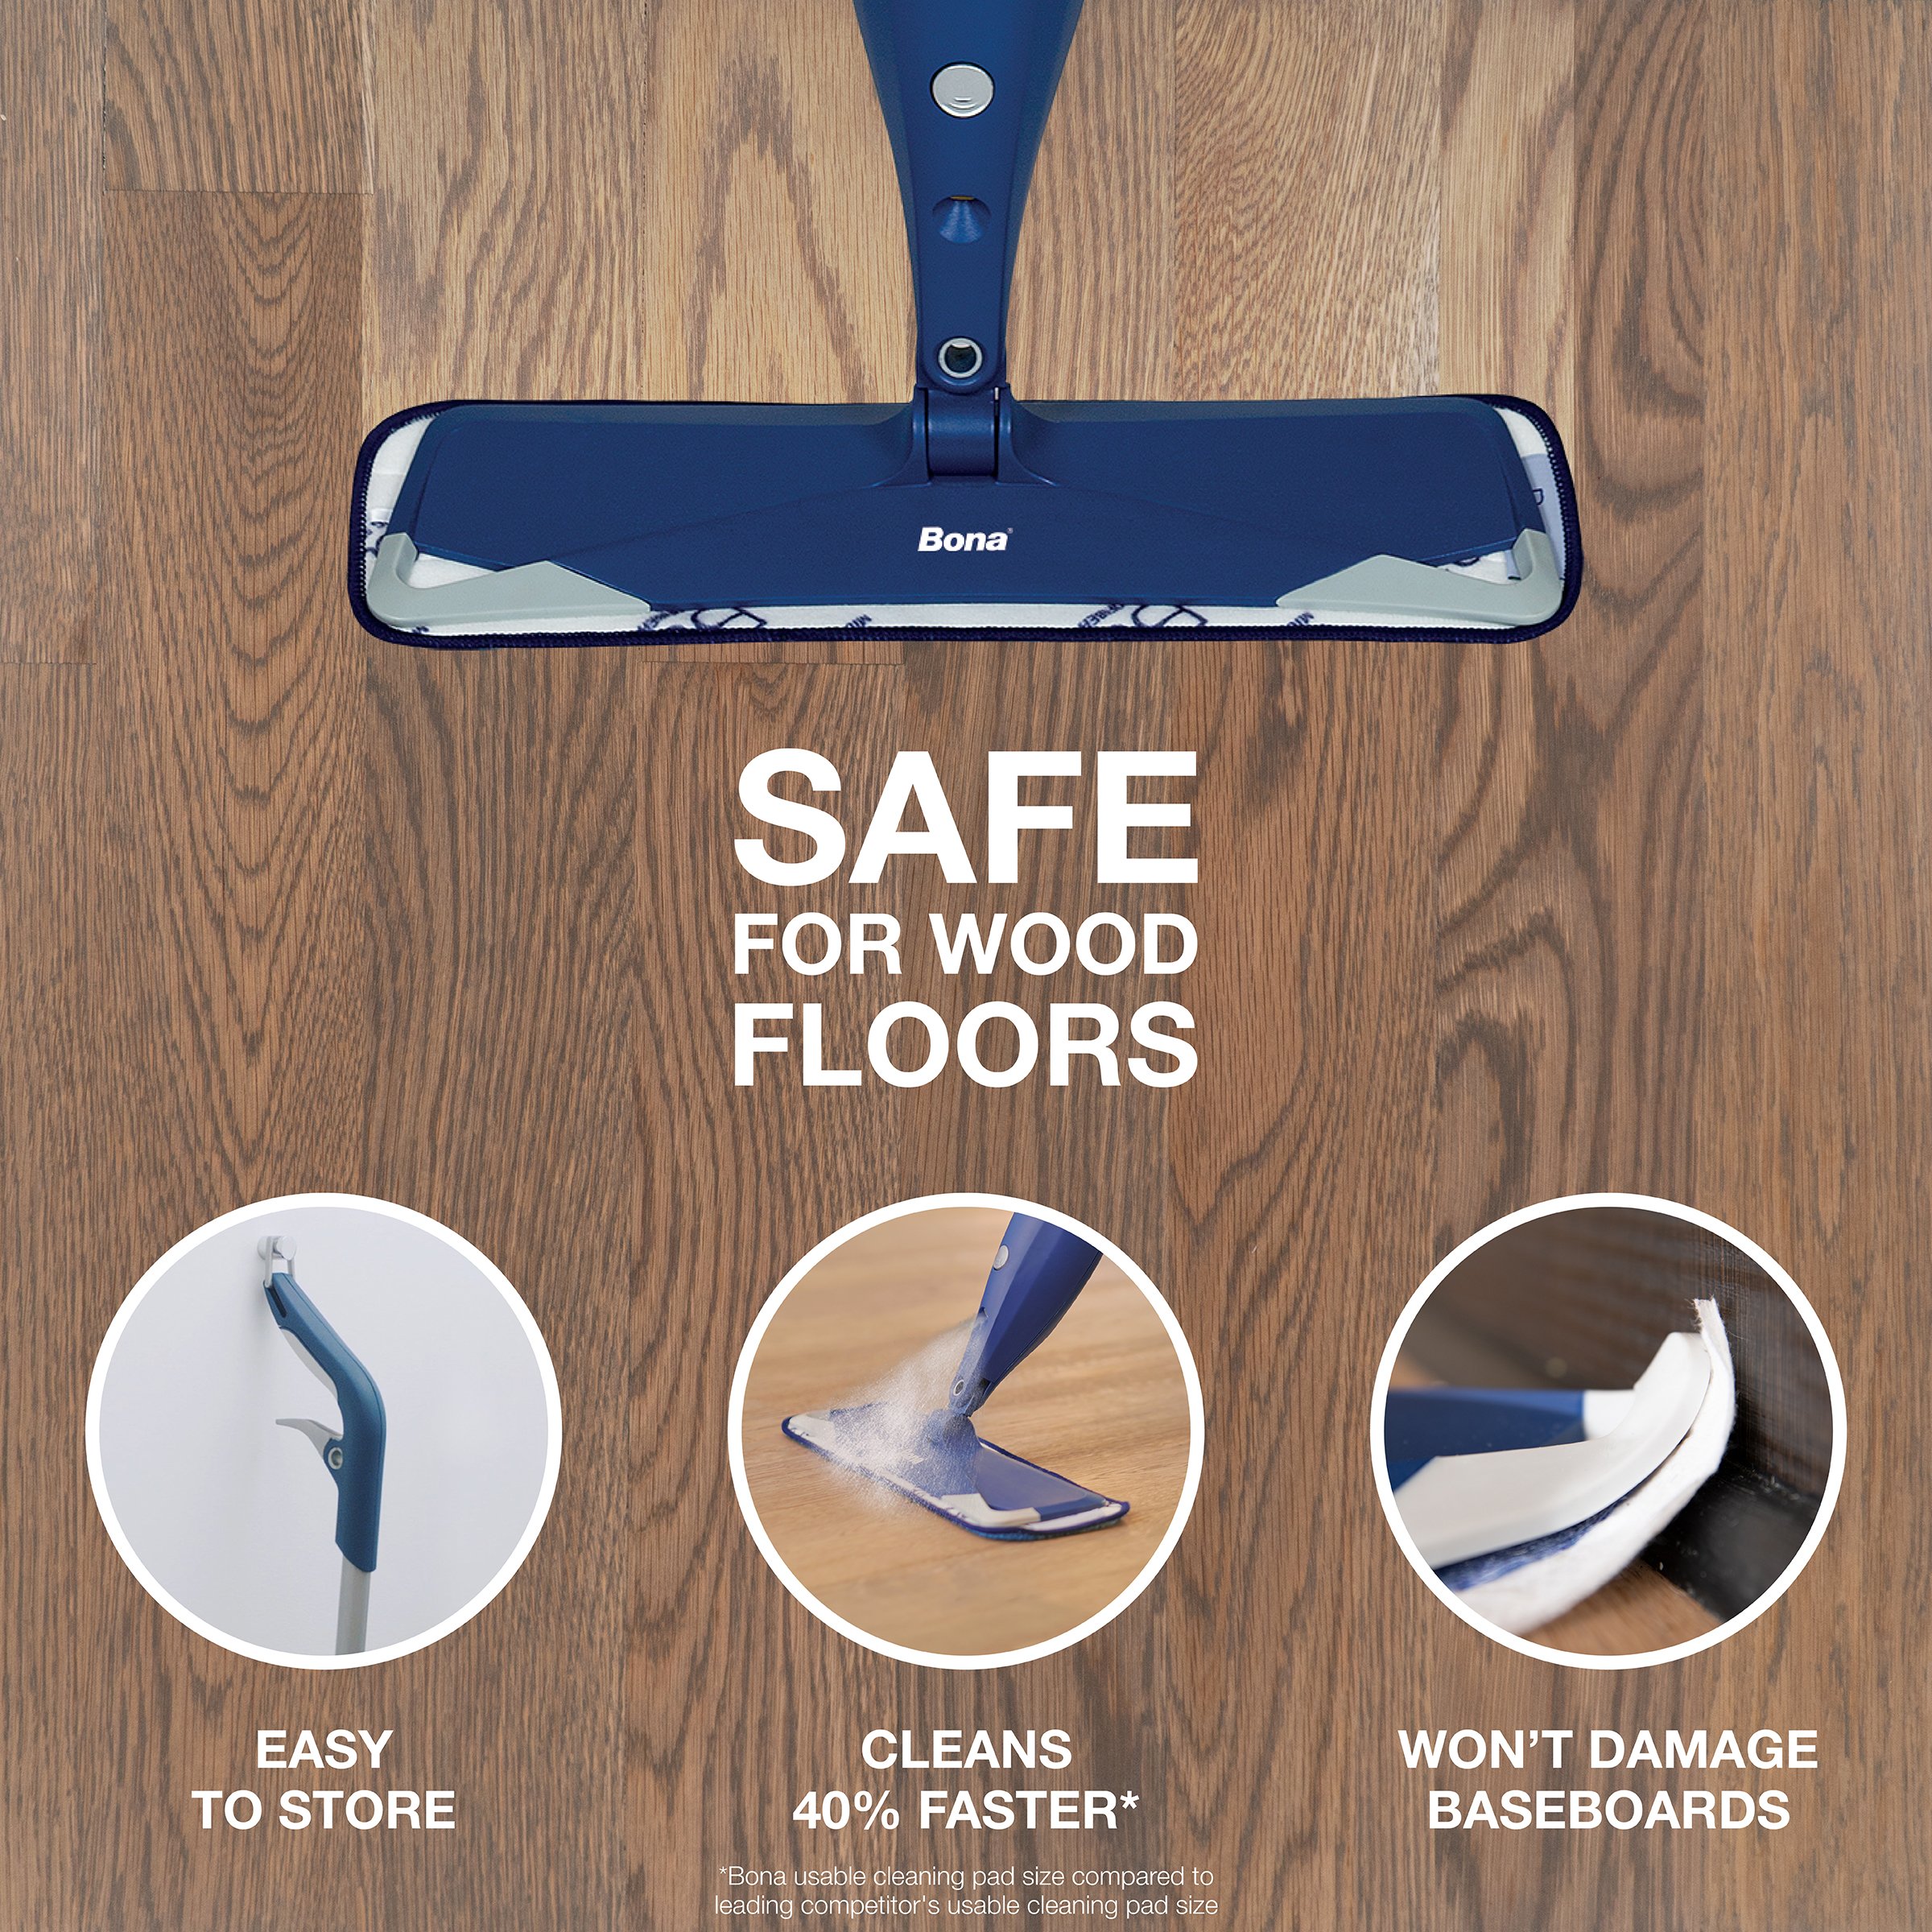 Bona Hardwood Floor Premium Microfiber Spray Mop WM710013496 - The Home  Depot